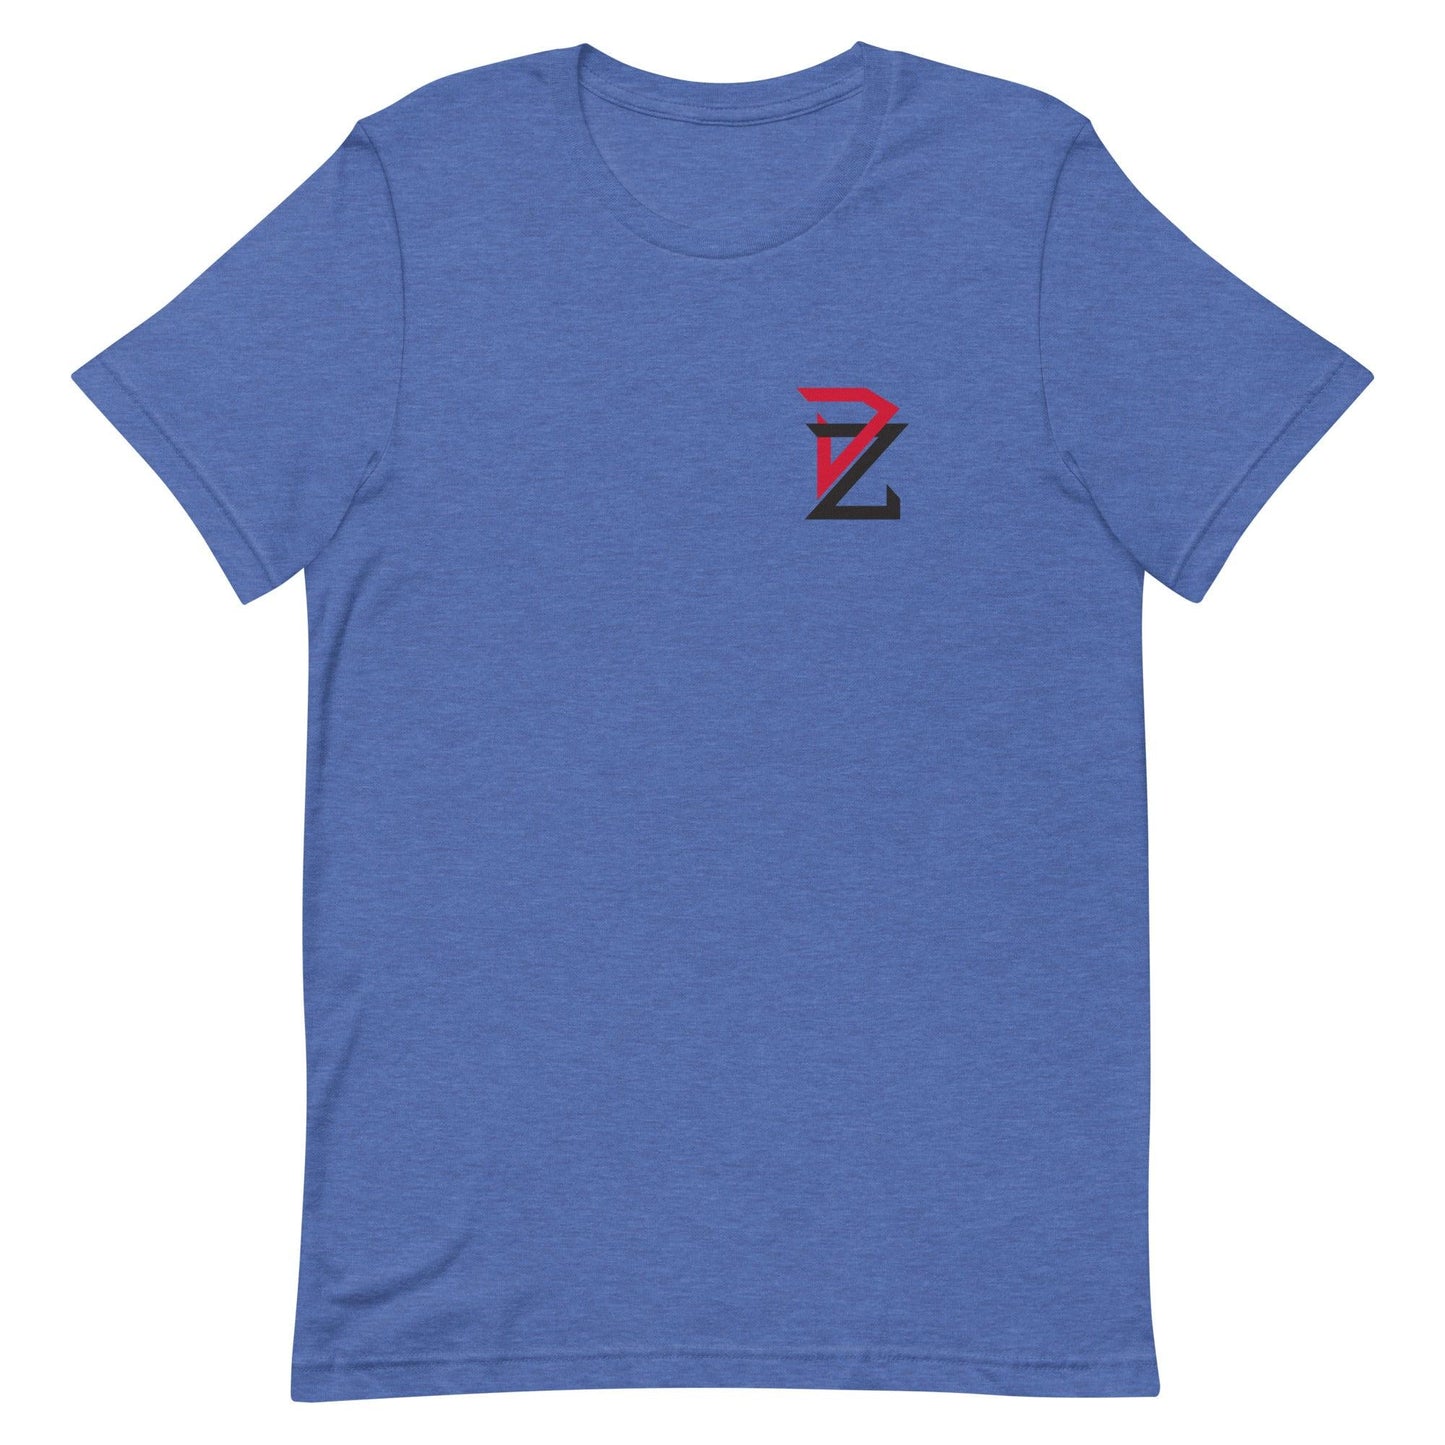 Donovan Zsak "Essential" t-shirt - Fan Arch